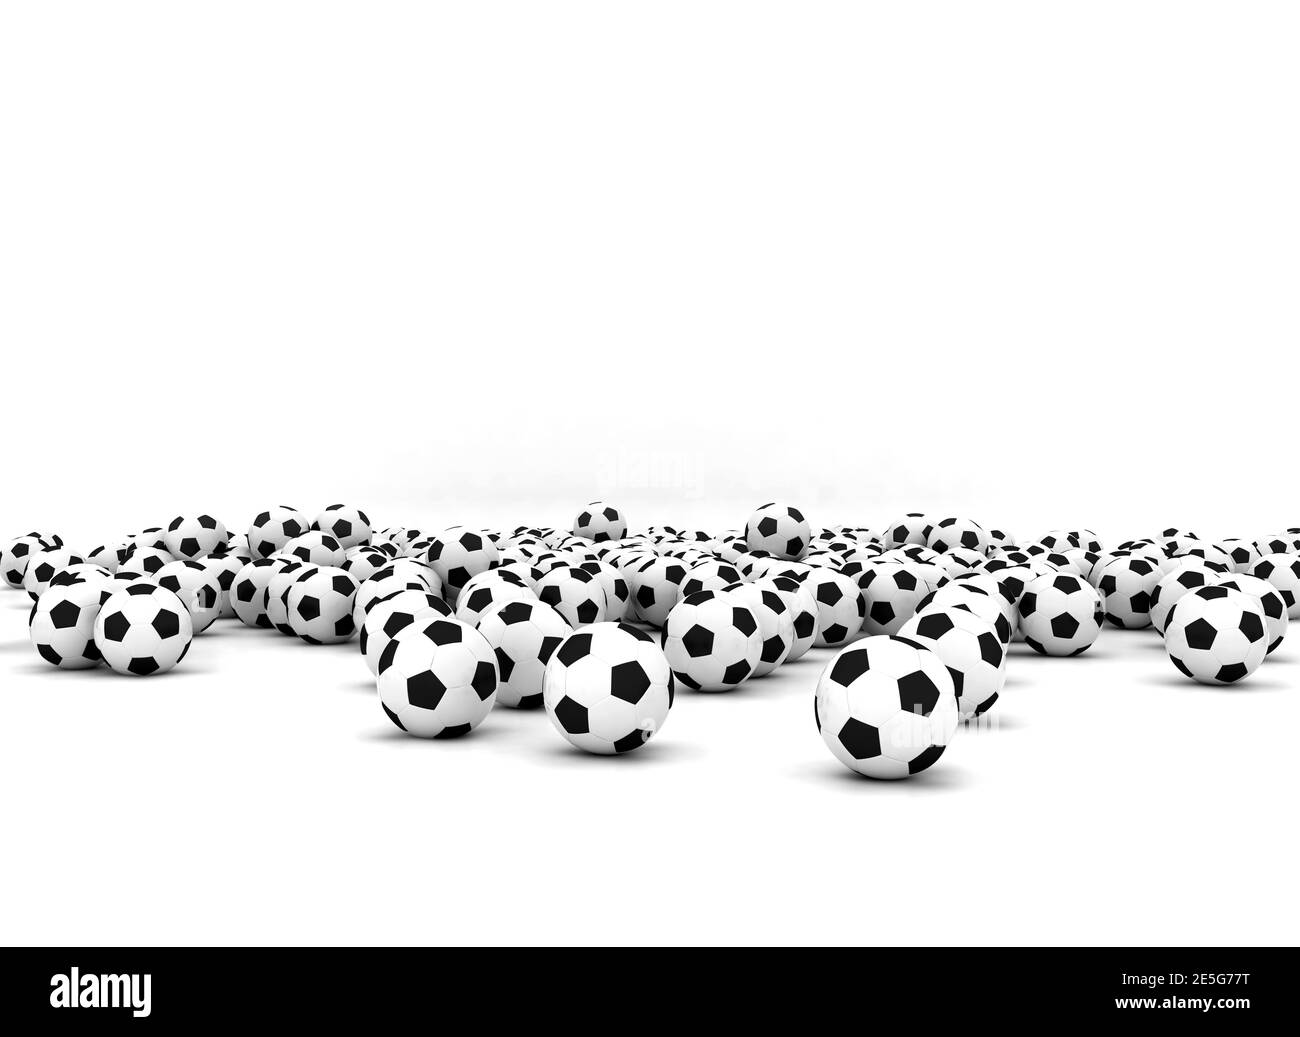 Soccer balls on white background. Large group of black and white soccer balls Stock Photo